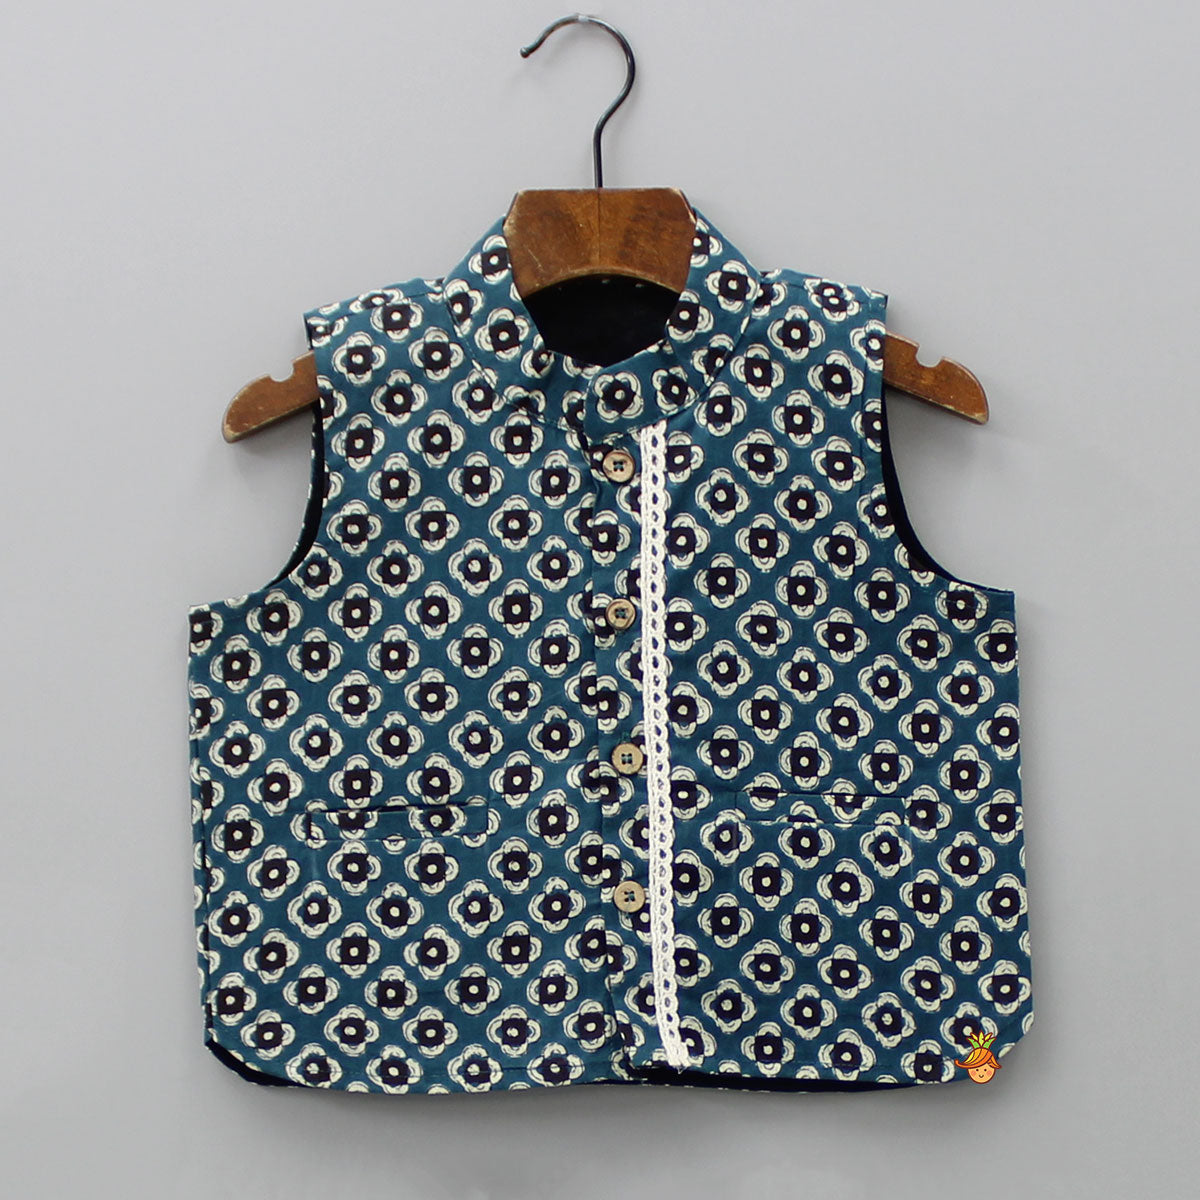 Pre Order: Pockets Detail Black Kurta With Printed Jacket And Pyjama